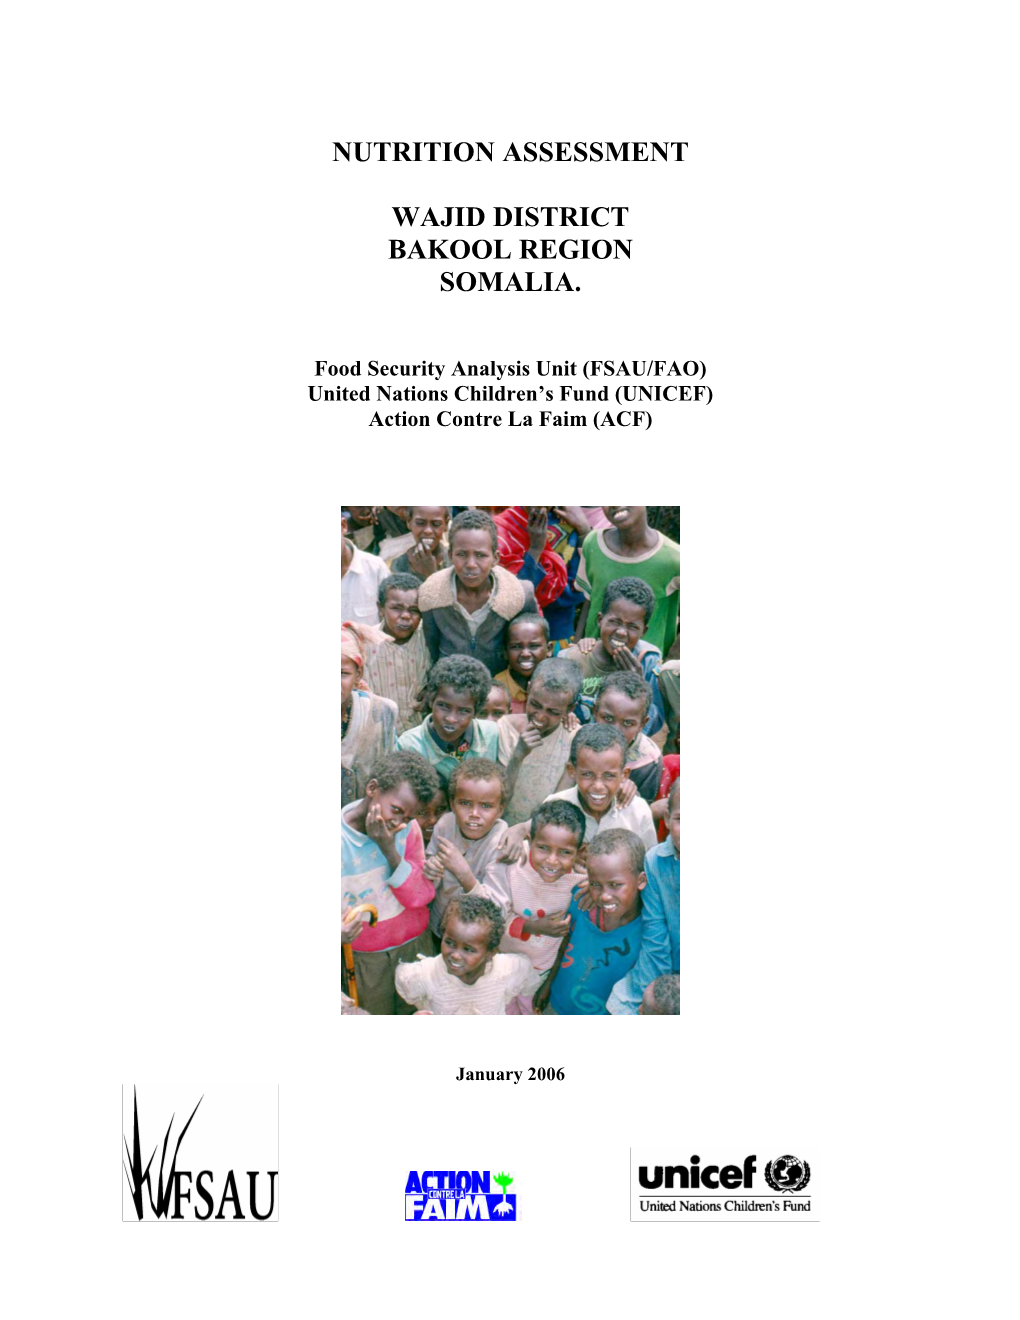 Wajid District Nutrition Assessment Report